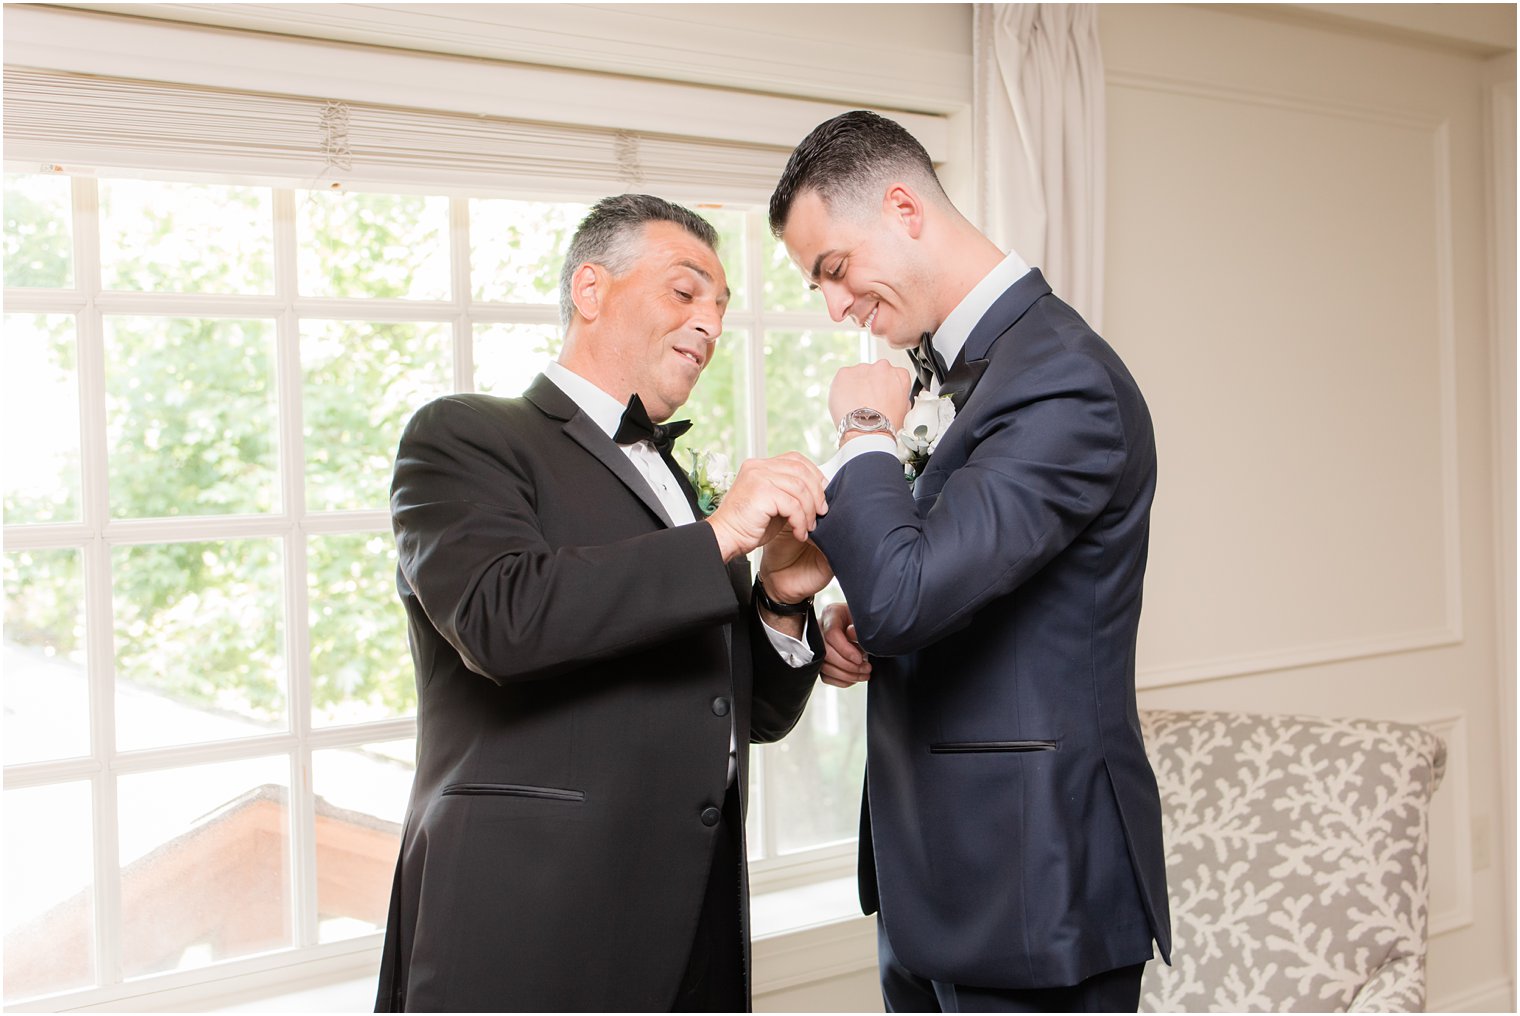 Groom's father helping him put on cufflinks